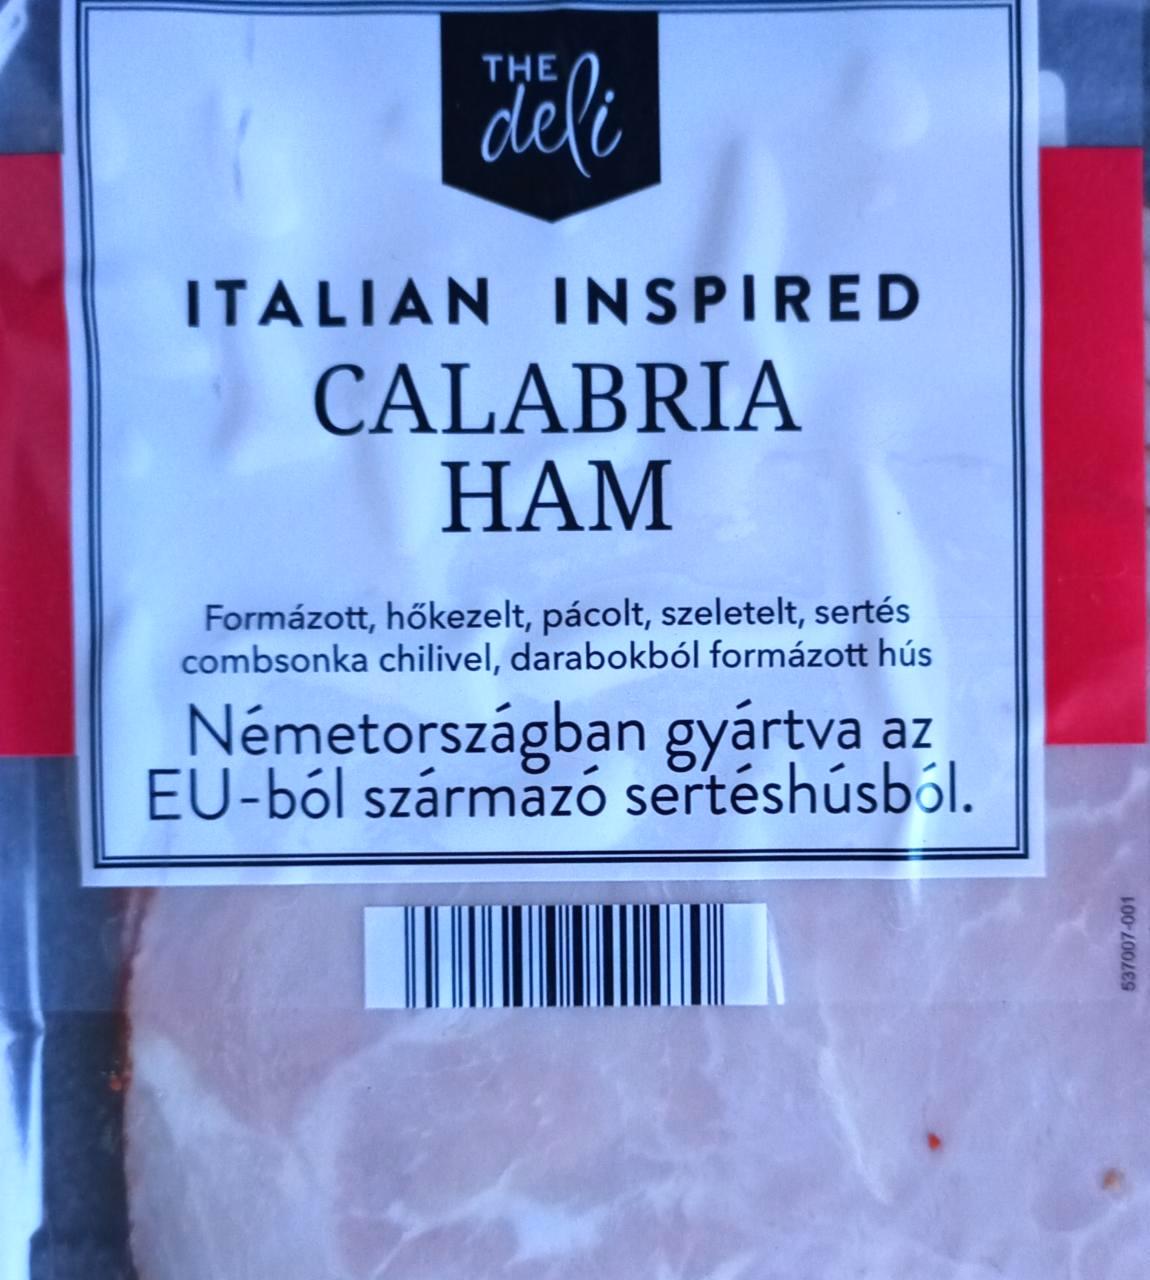 Képek - Italian inspired Calabria ham The deli